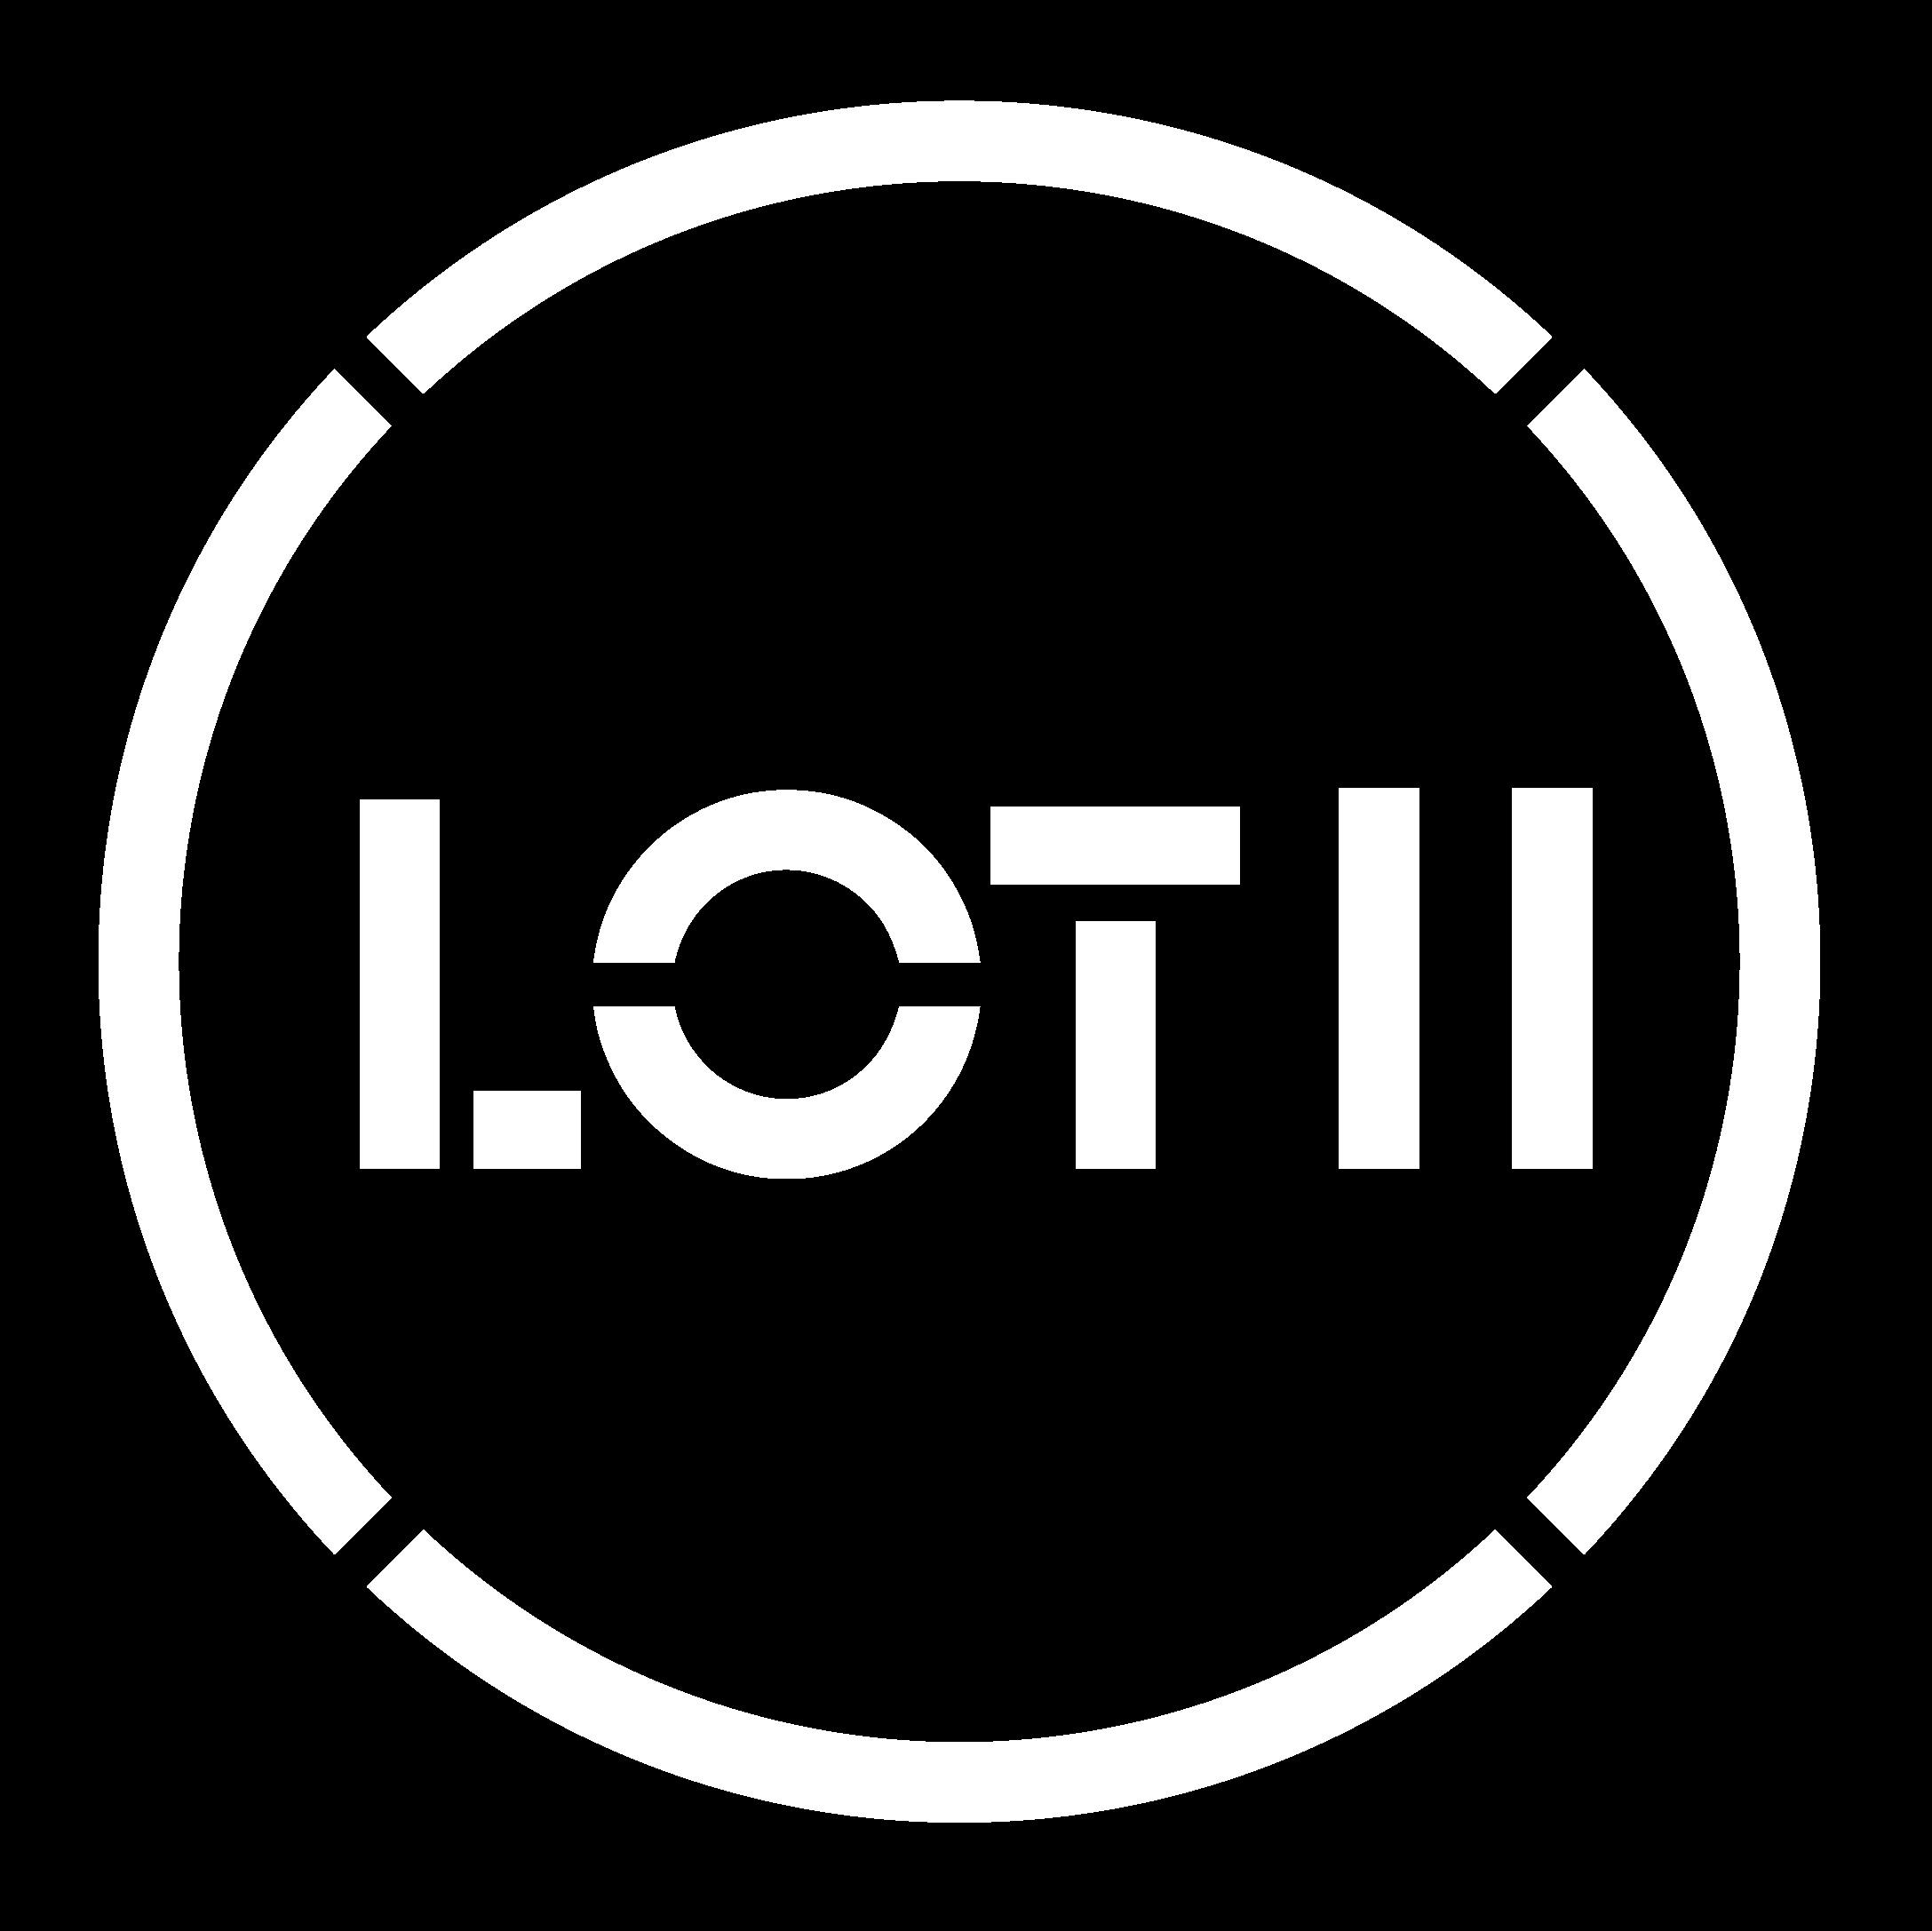 Lot 11